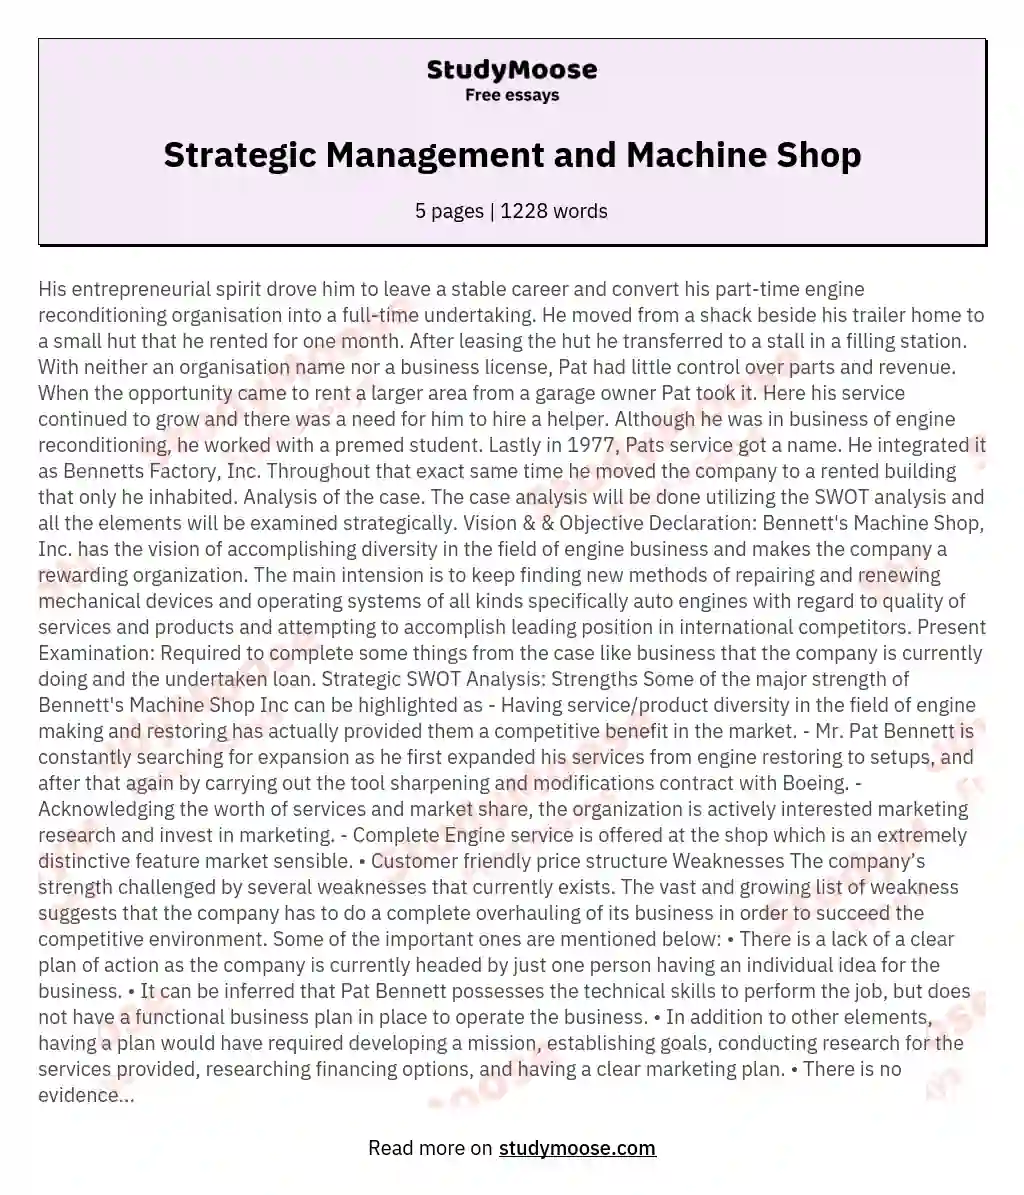 Strategic Management and Machine Shop essay